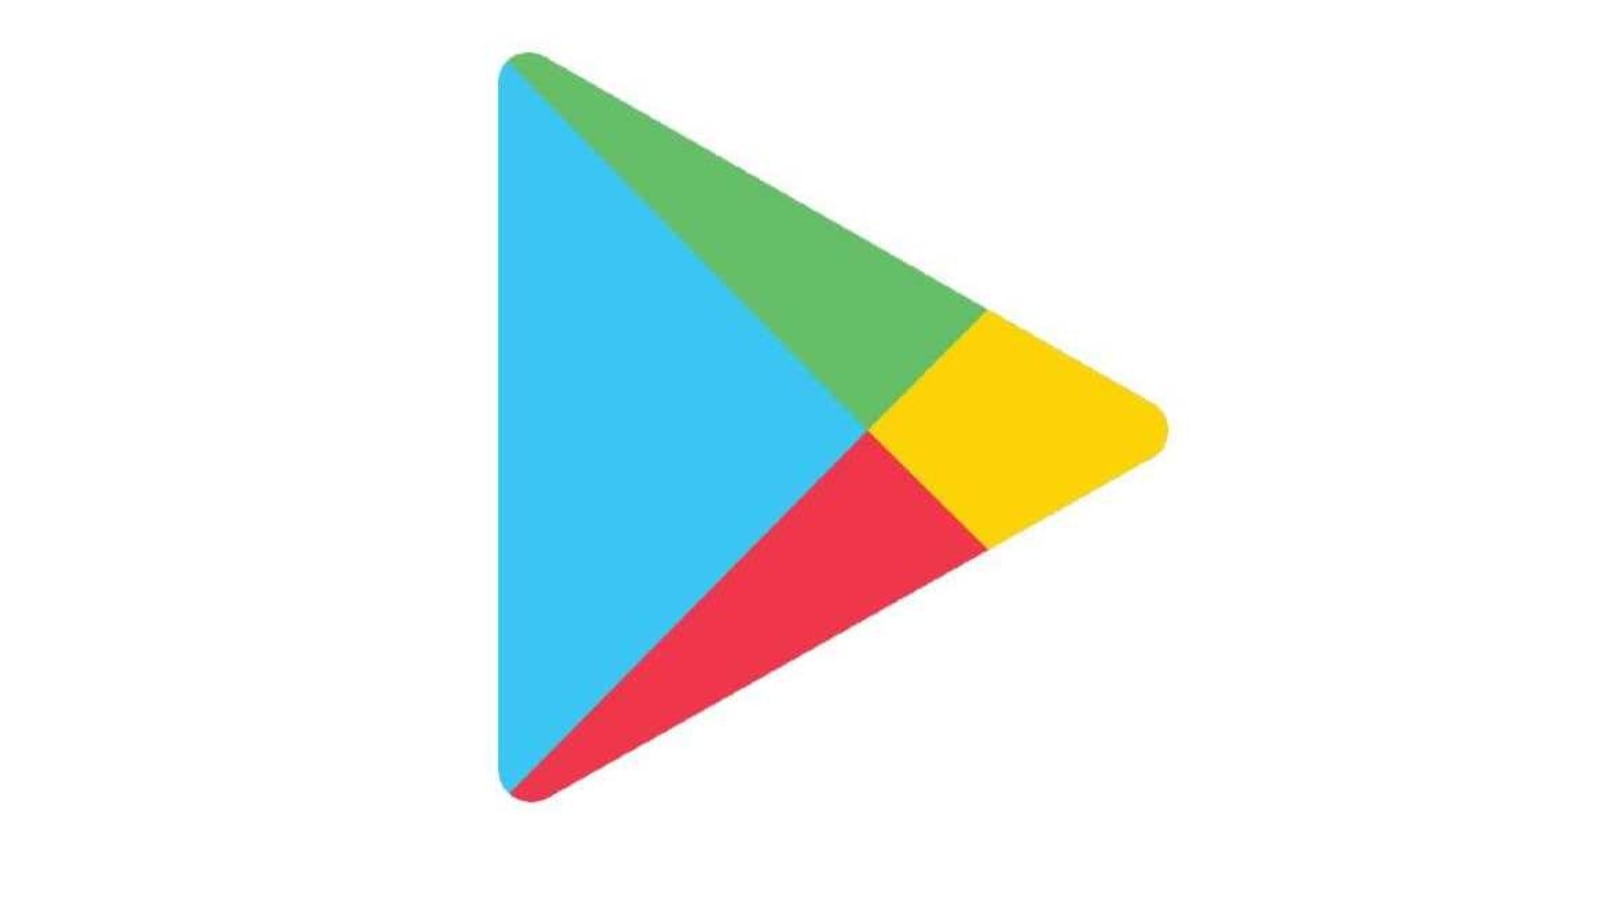 Legends of Runeterra - Apps on Google Play